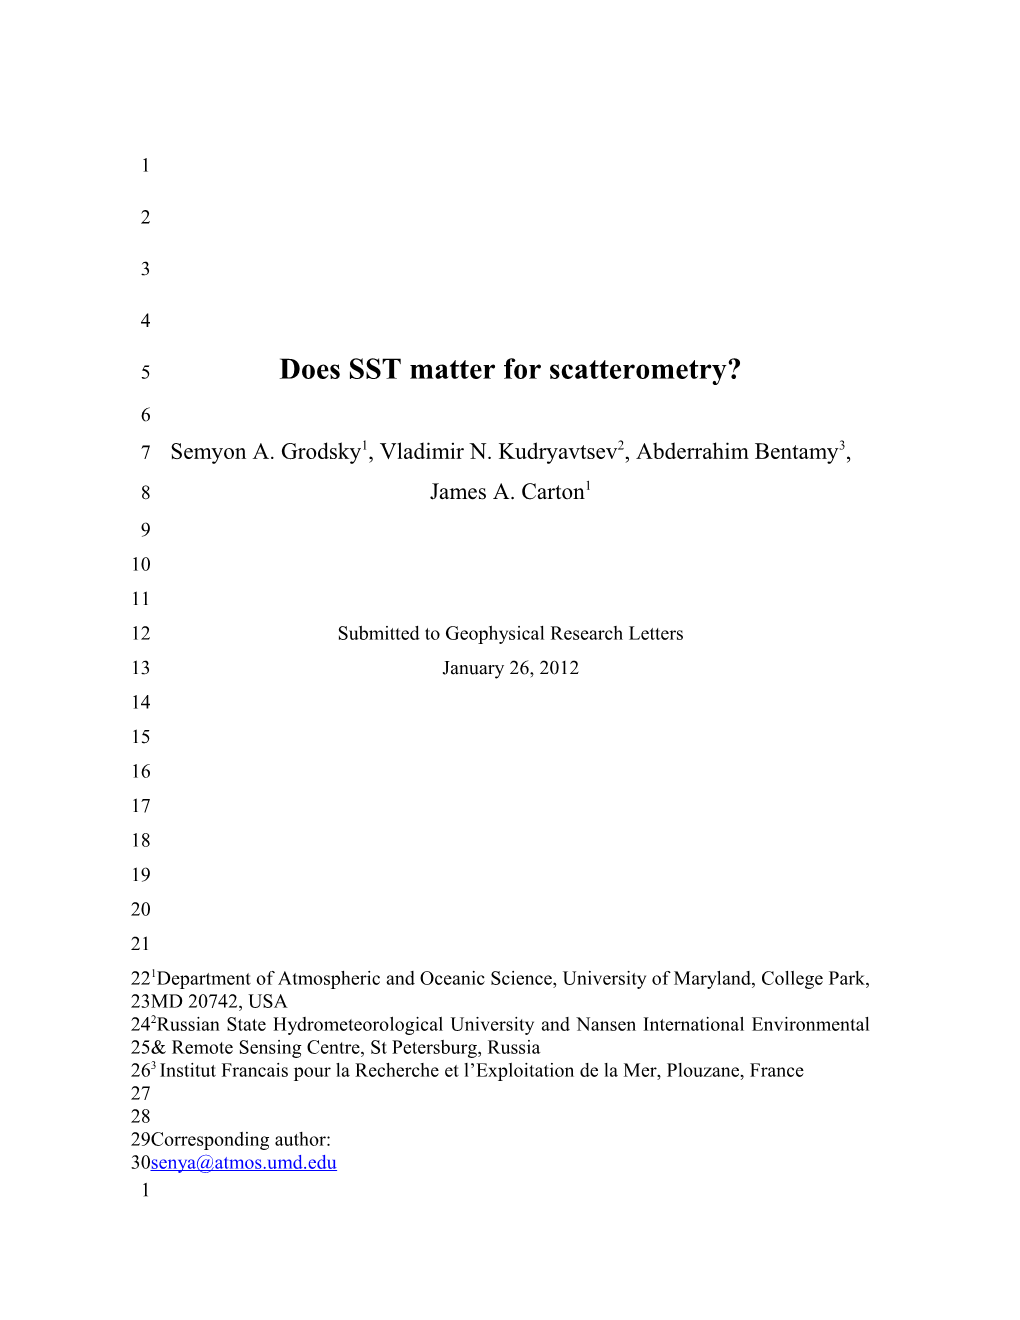 Does SST Matter for Scatterometry